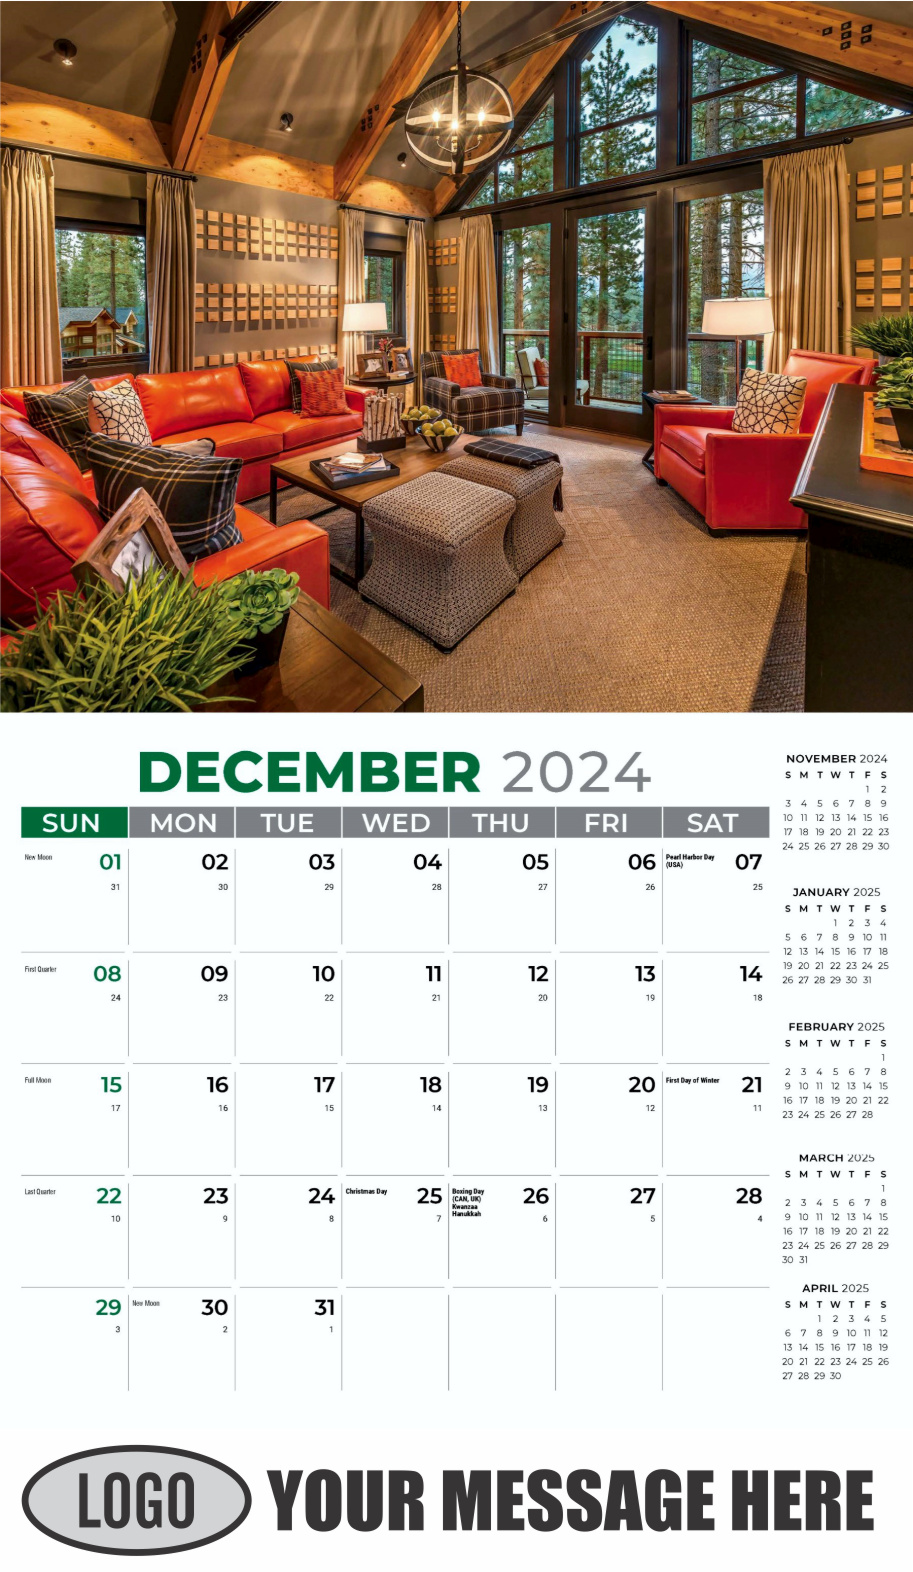 Decor and Design 2024 Interior Design Business Promotional Calendar - December